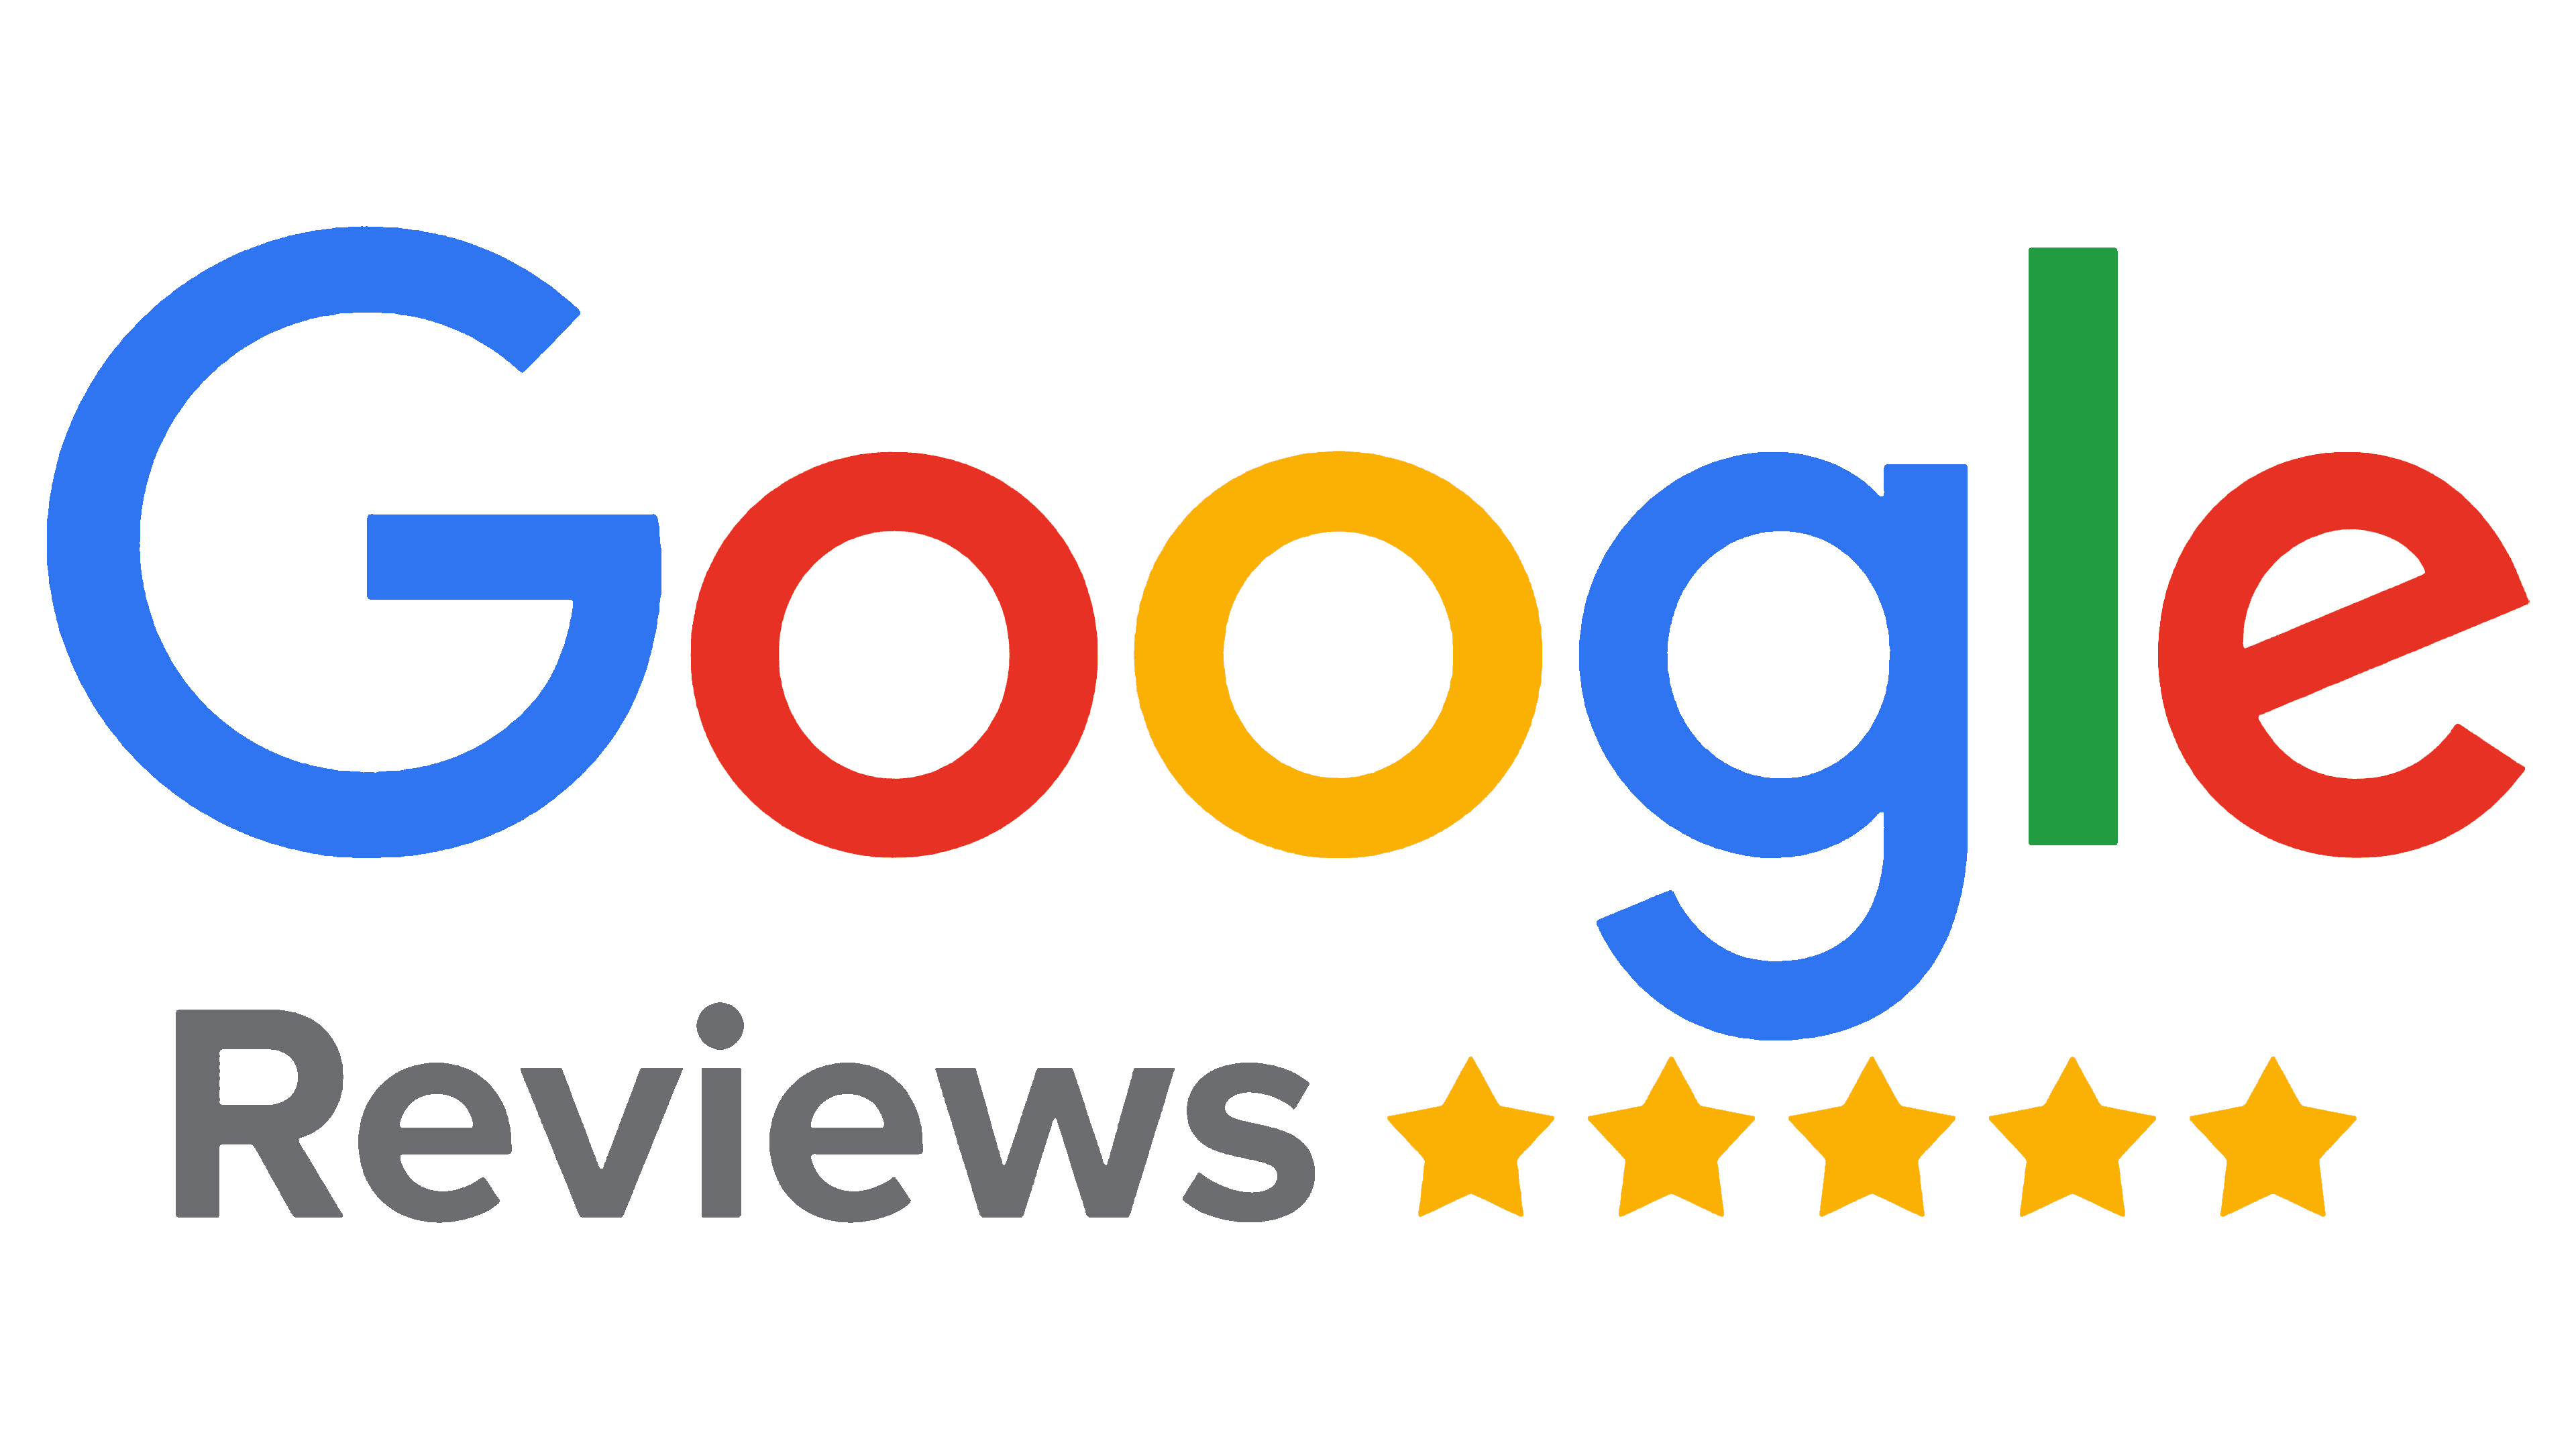 Google Critics Response